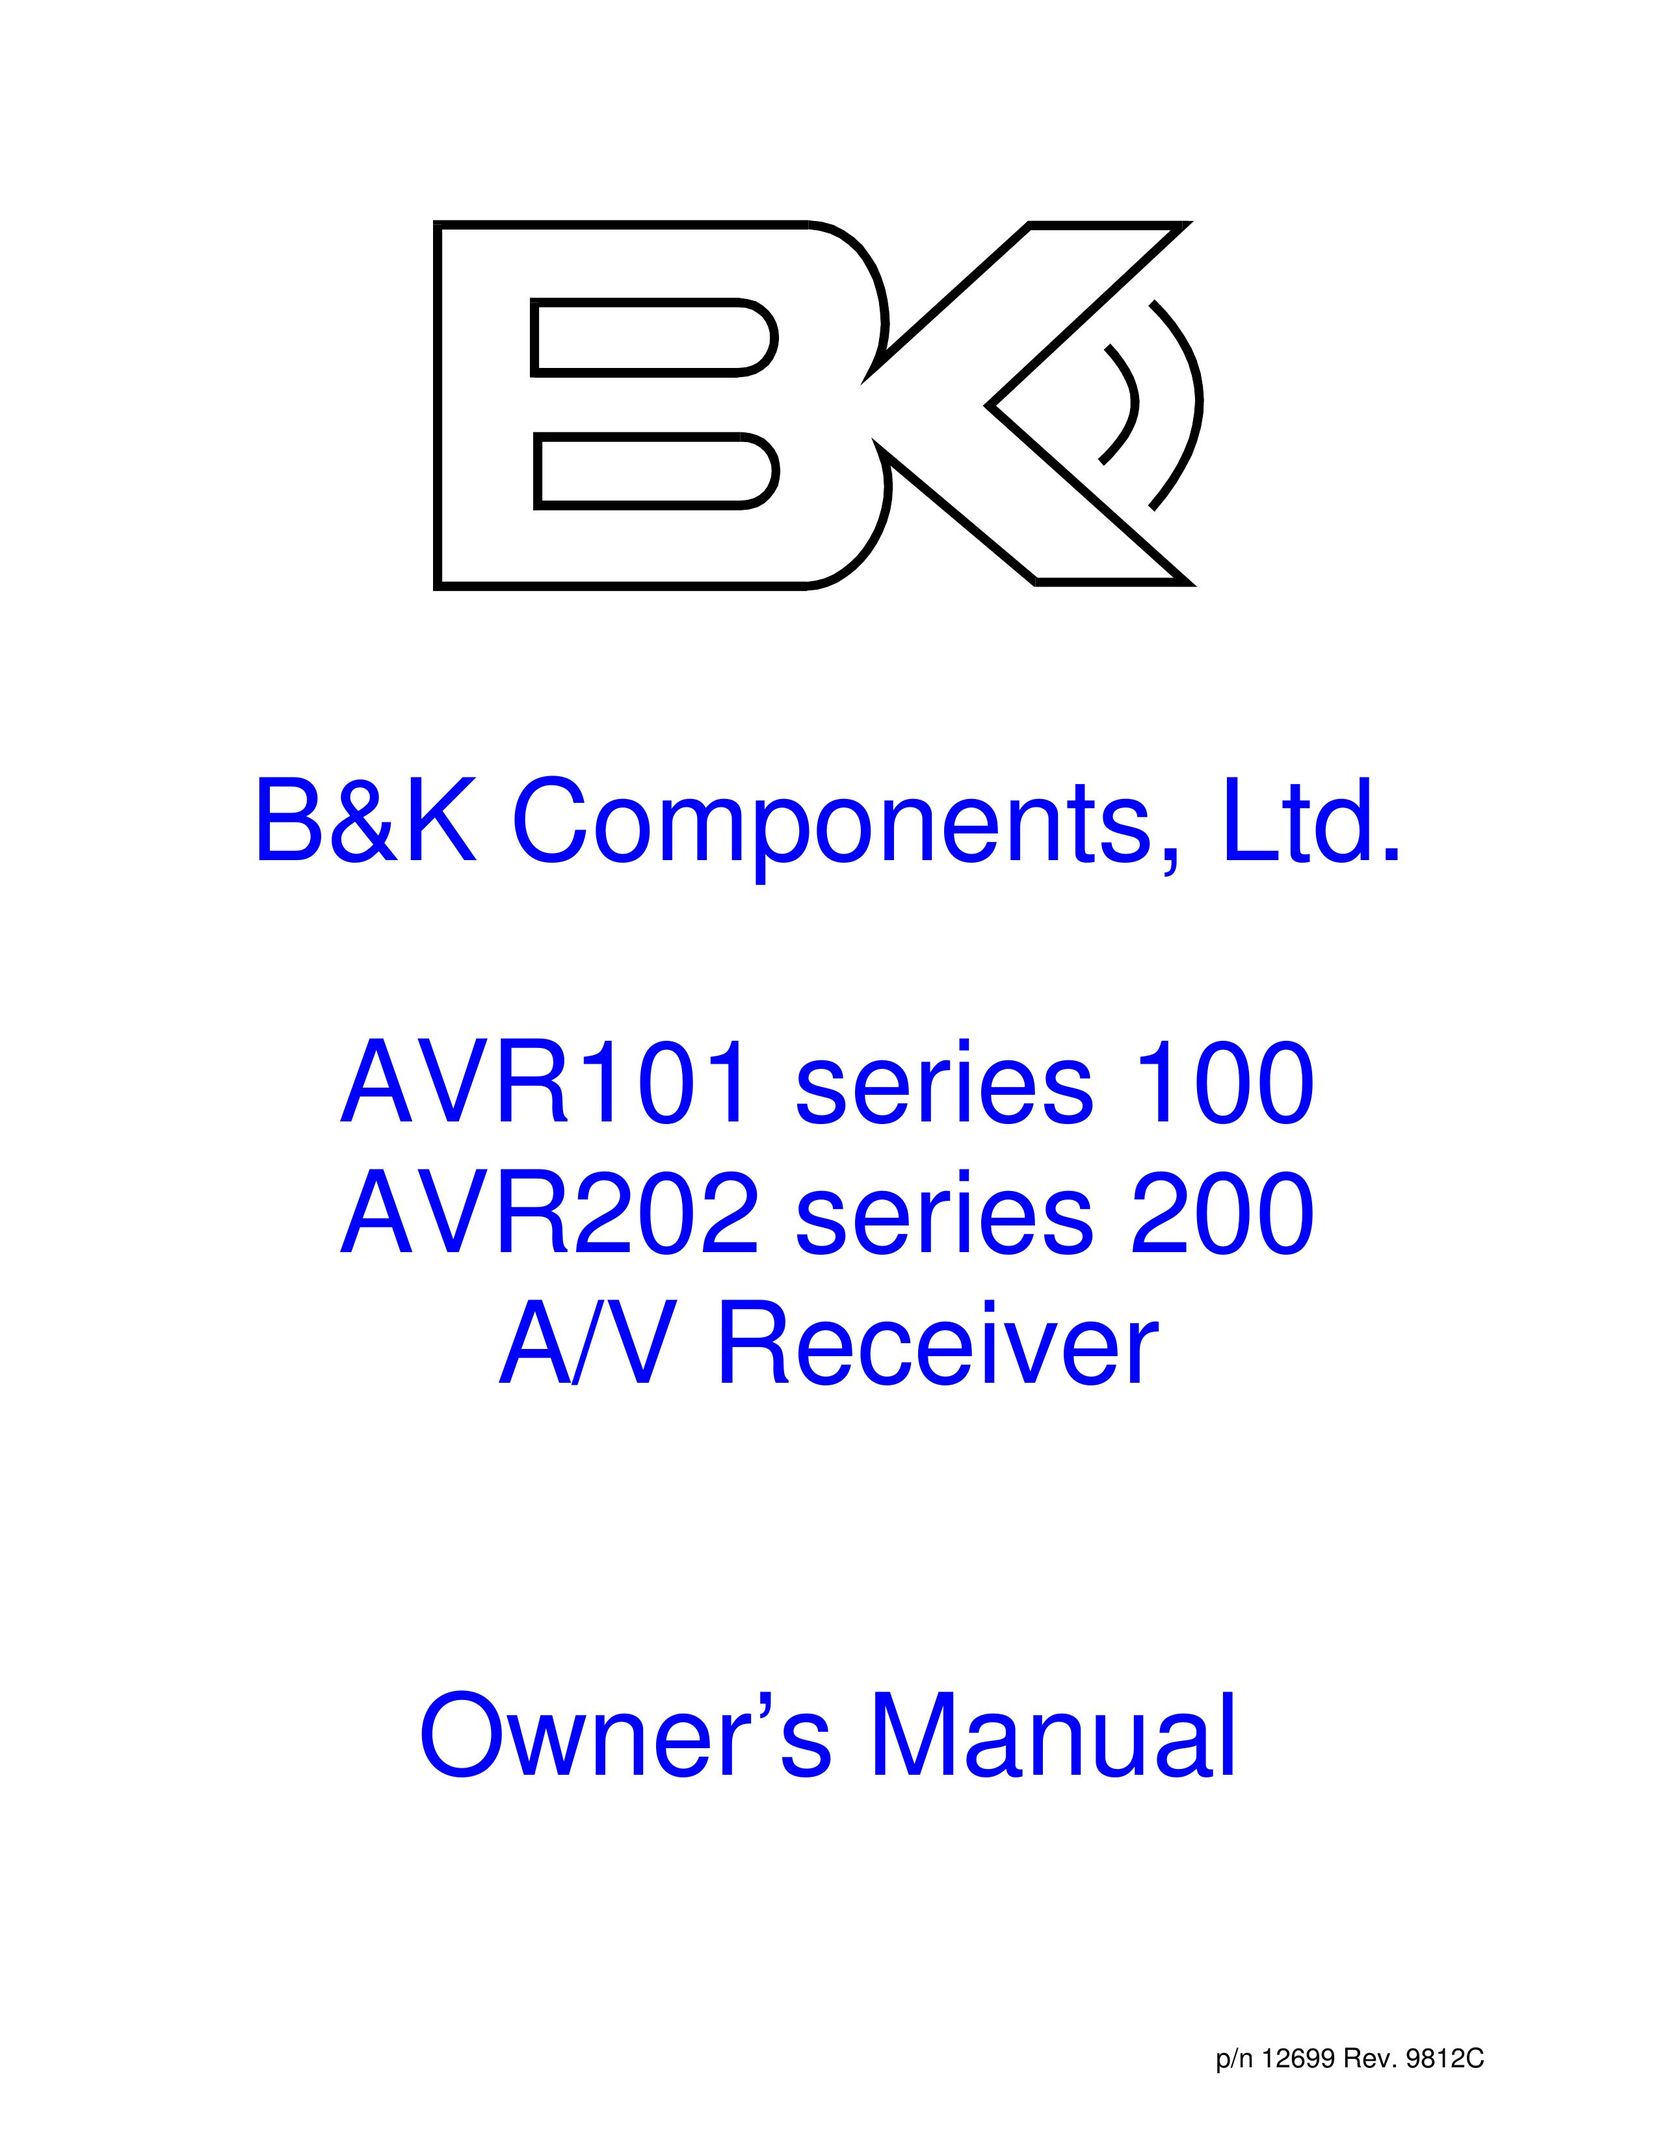 B&K AVR202 Series Stereo Receiver User Manual